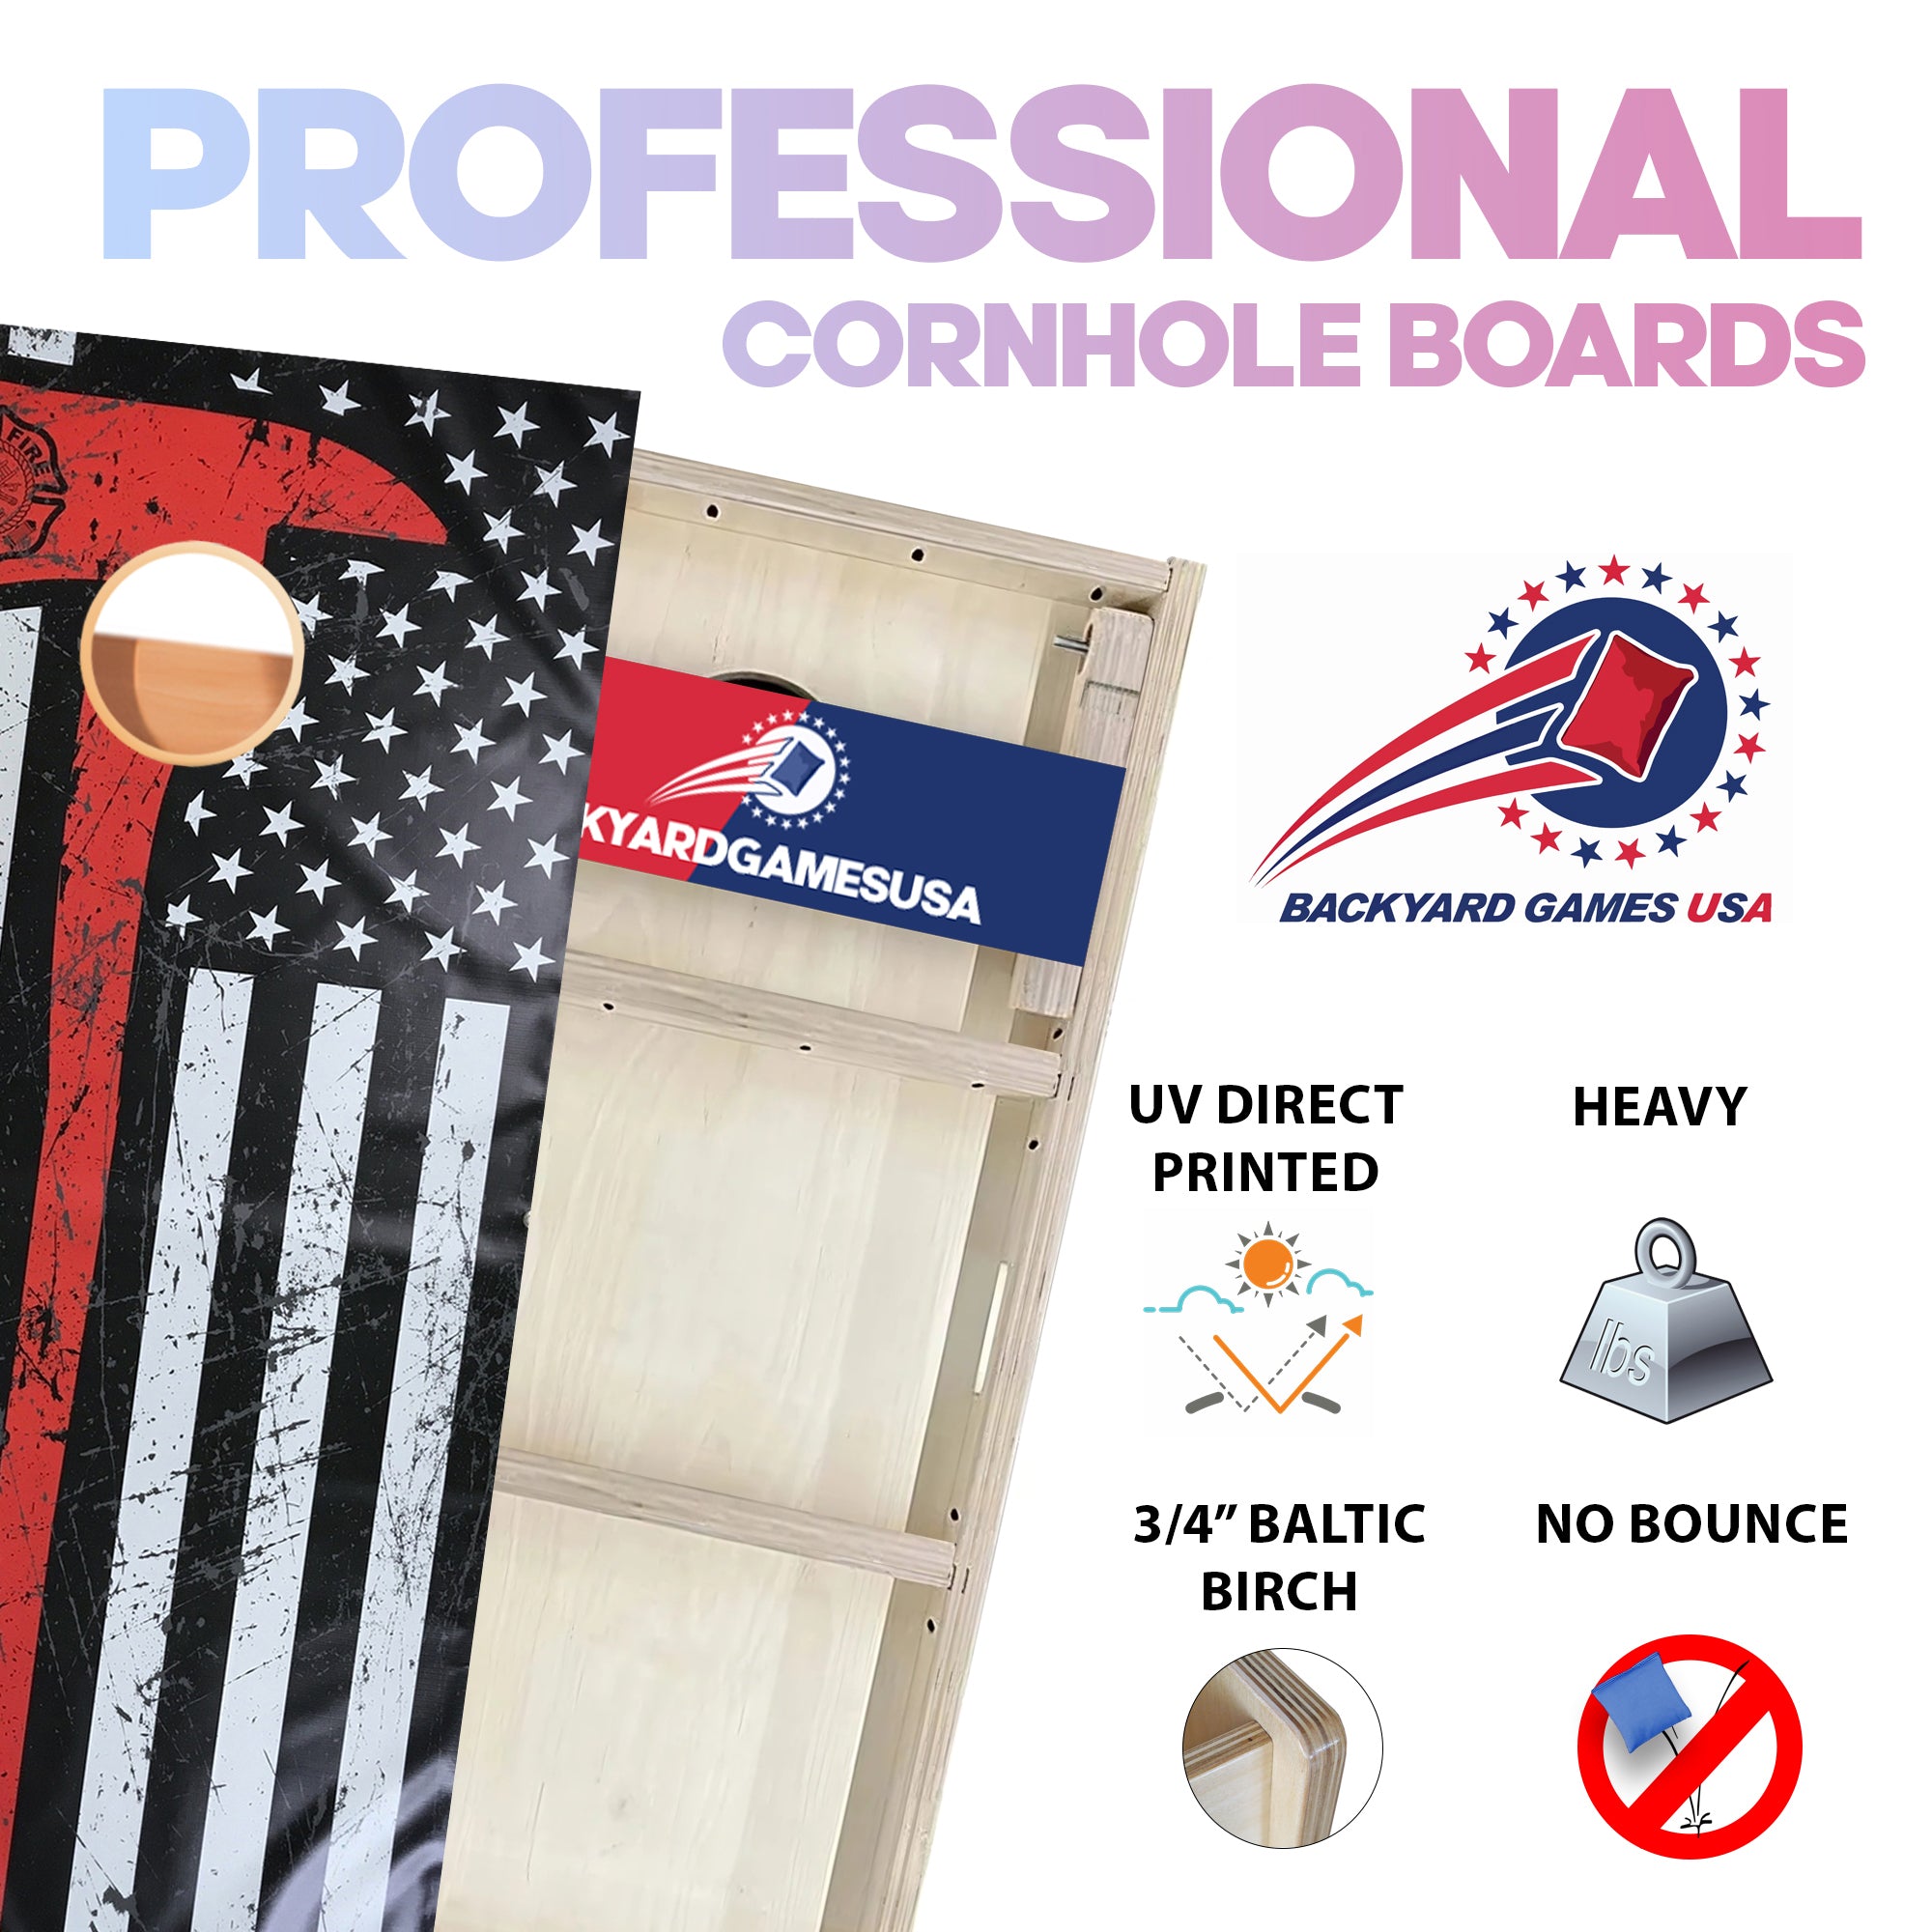 Red Line Axe Professional Cornhole Boards